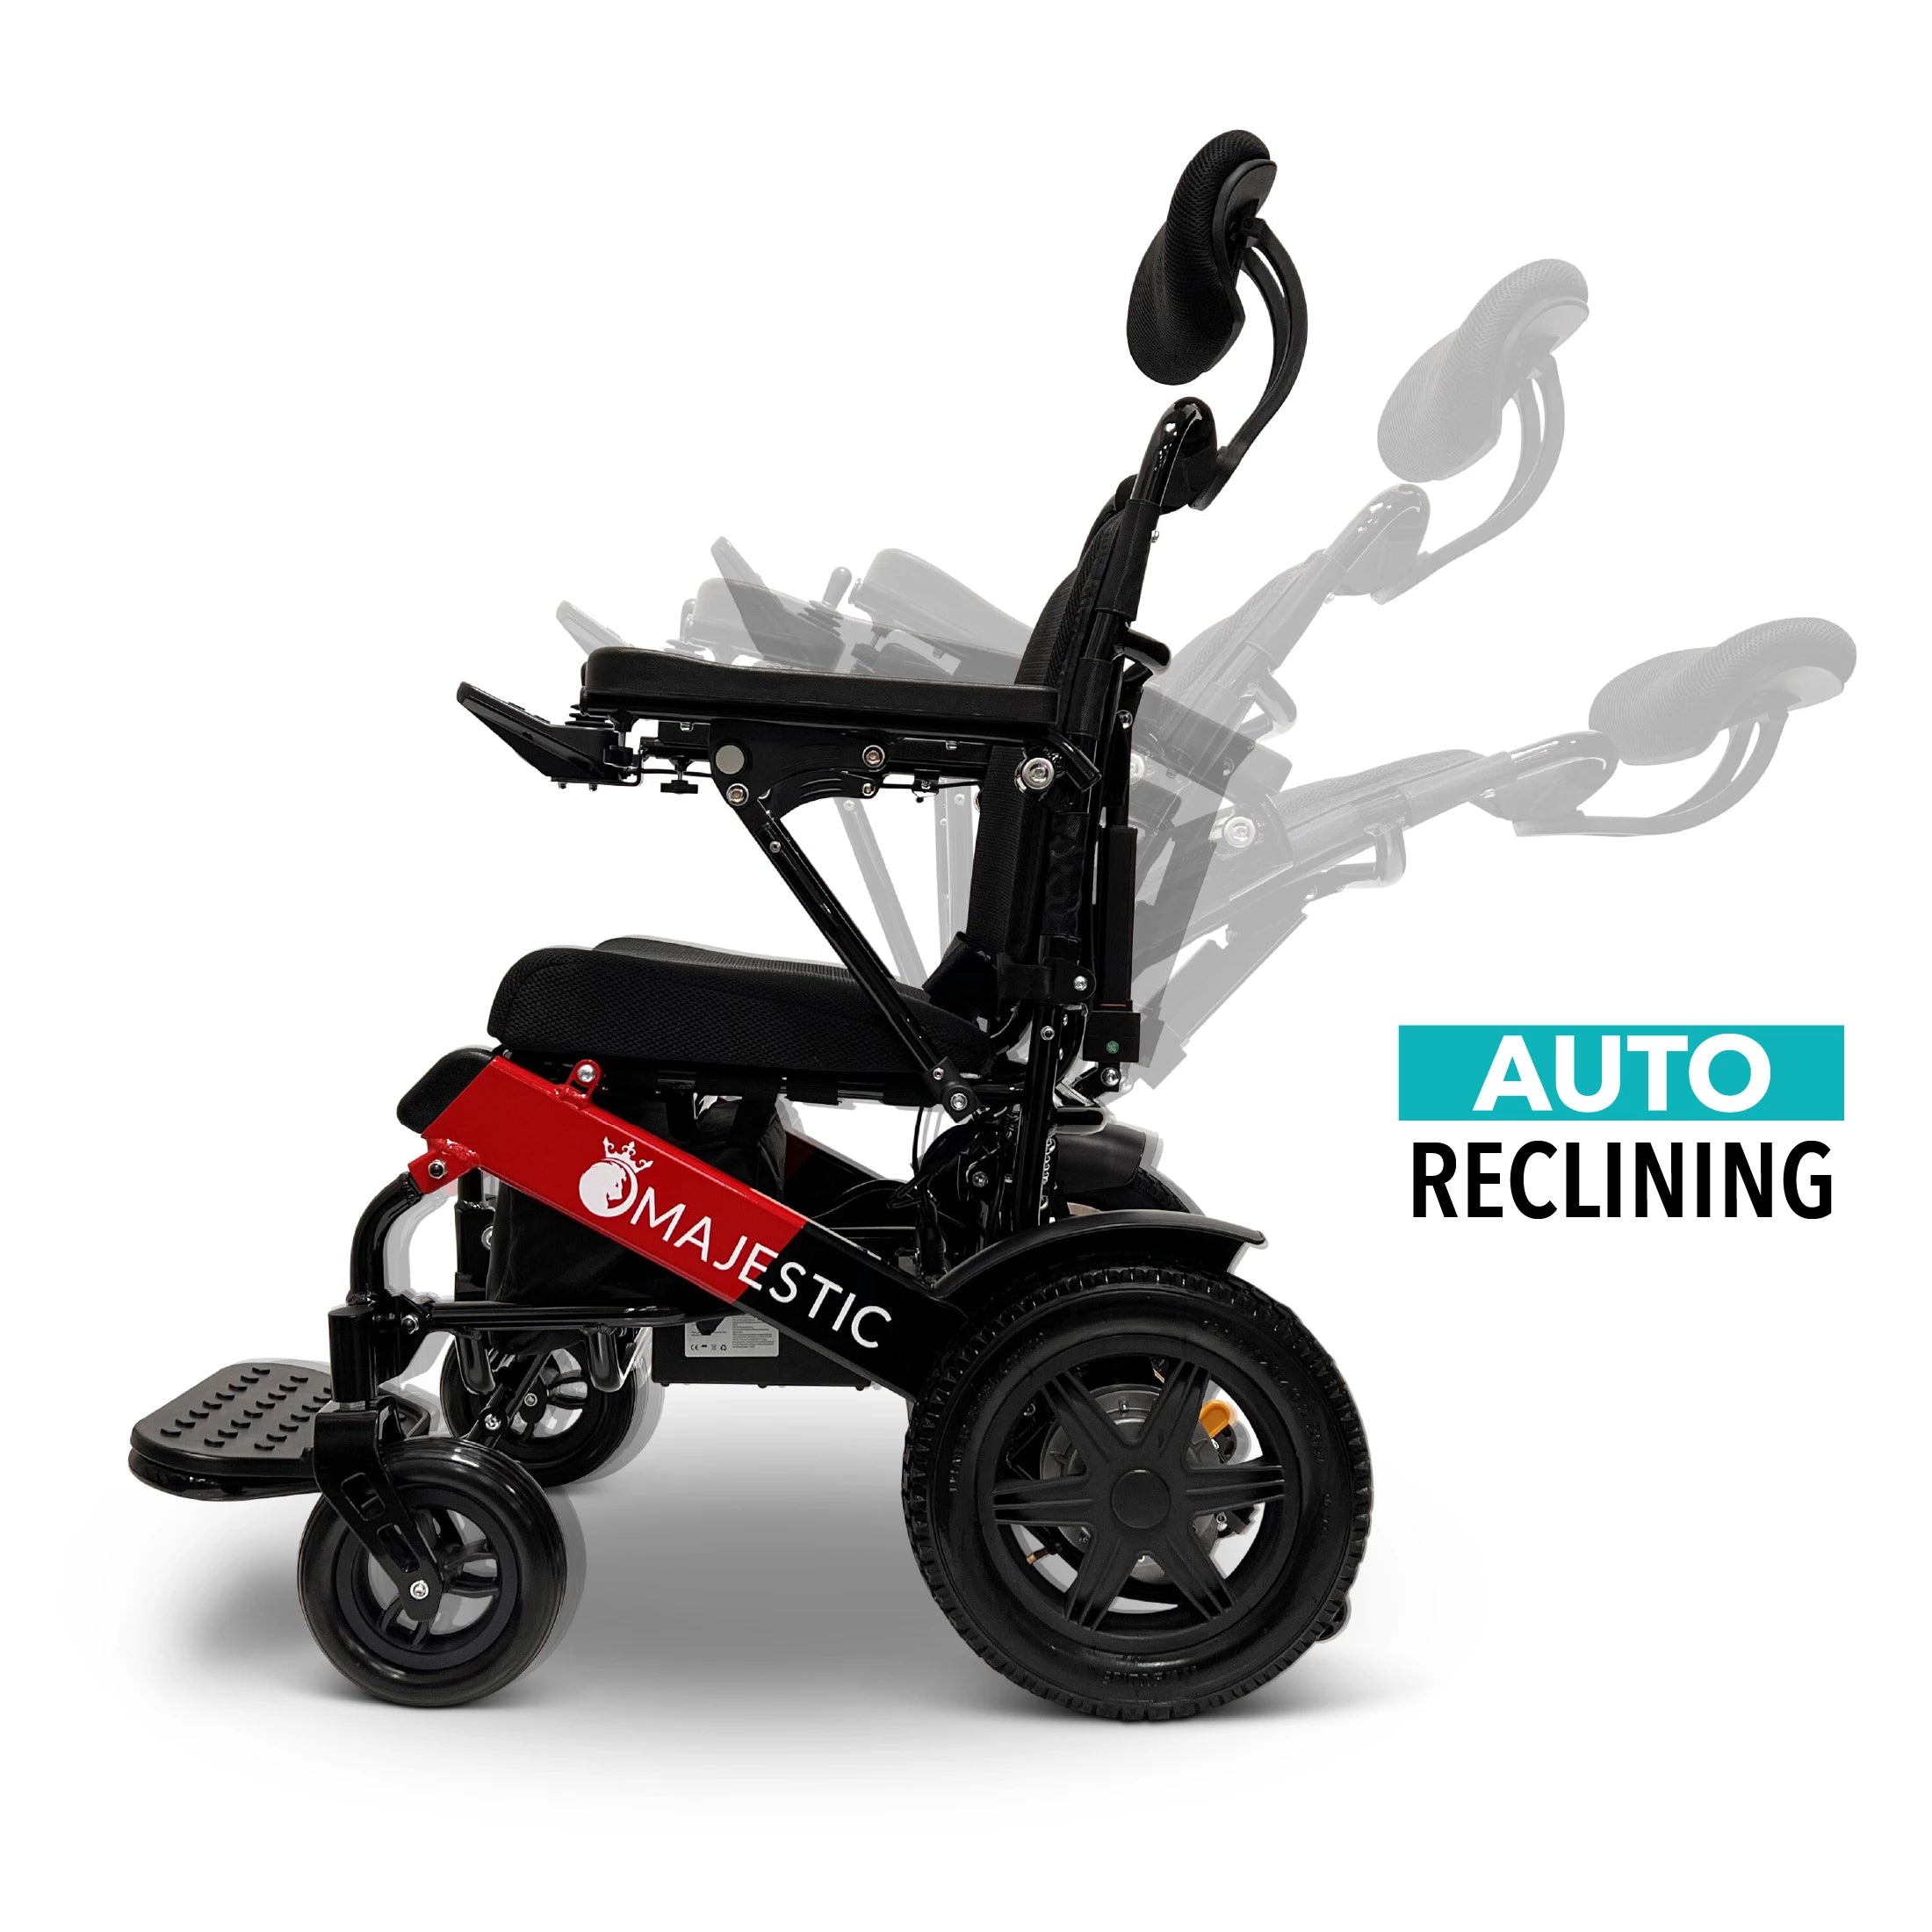 ComfyGo IQ-8000 Limited Edition Folding Power Wheelchair  Folding electric  wheelchair, Electric wheelchair, Powered wheelchair